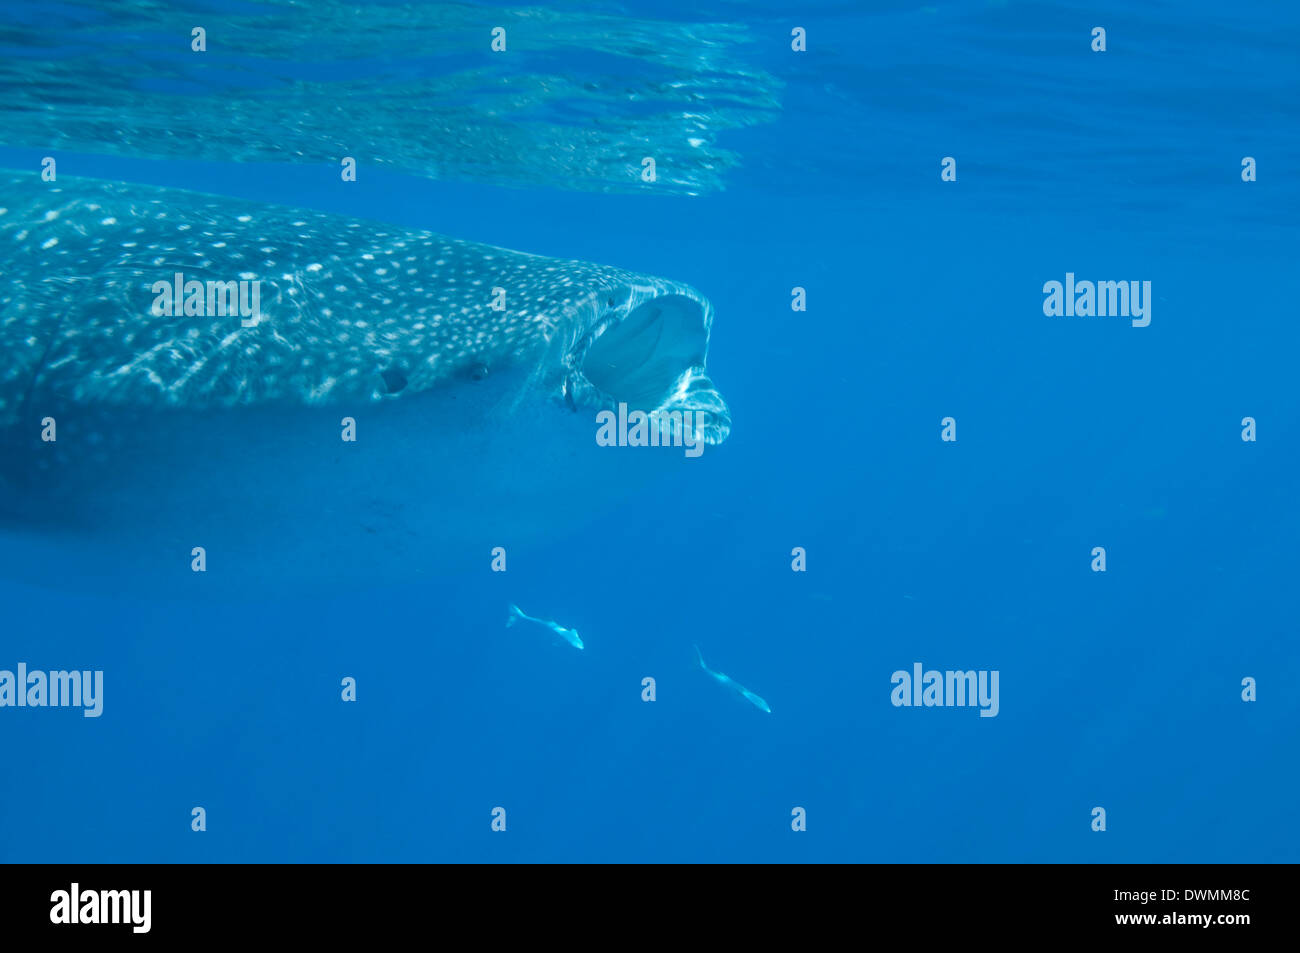 Whale shark (Rhincodon typus) feeding at the surface on zooplankton, Yum Balam Marine Protected Area, Quintana Roo, Mexico Stock Photo